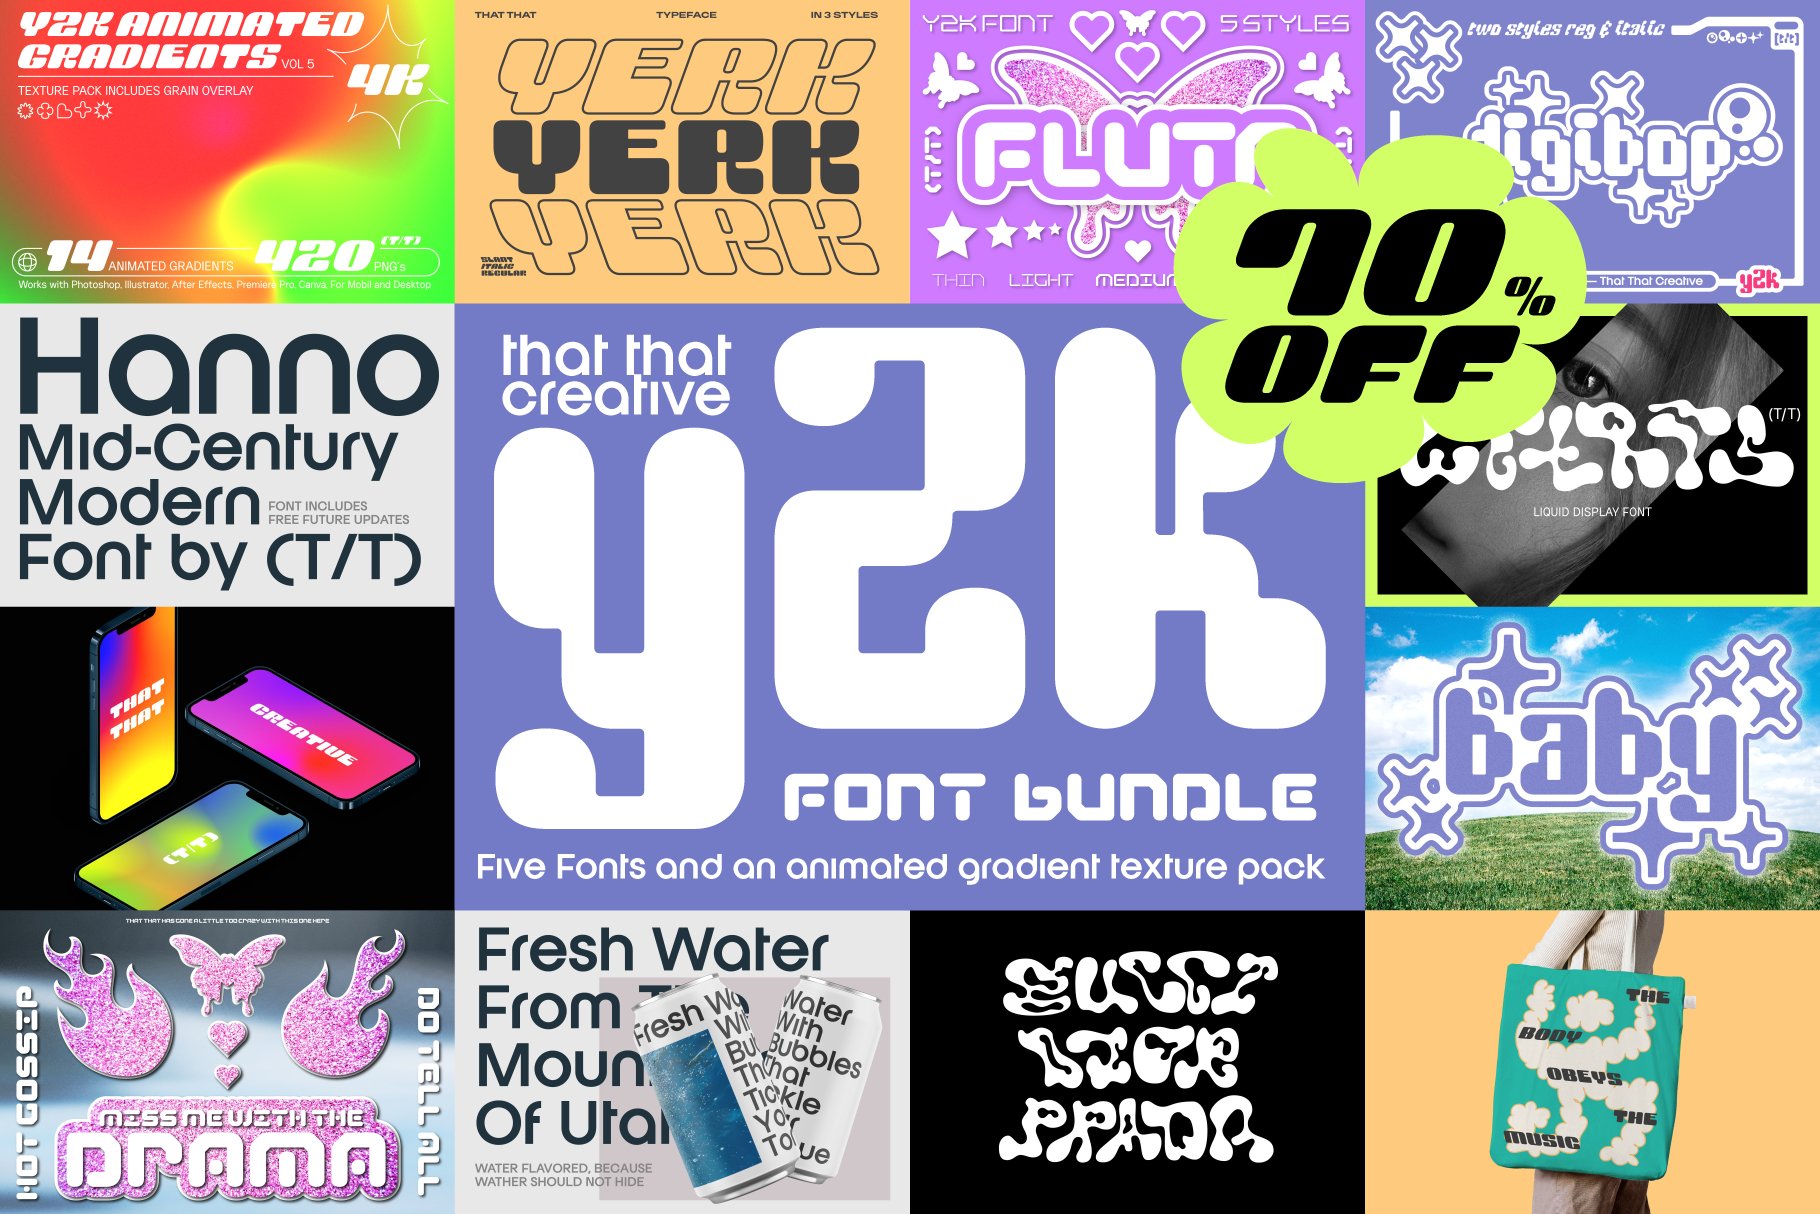 Y2K Font Bundle cover image.